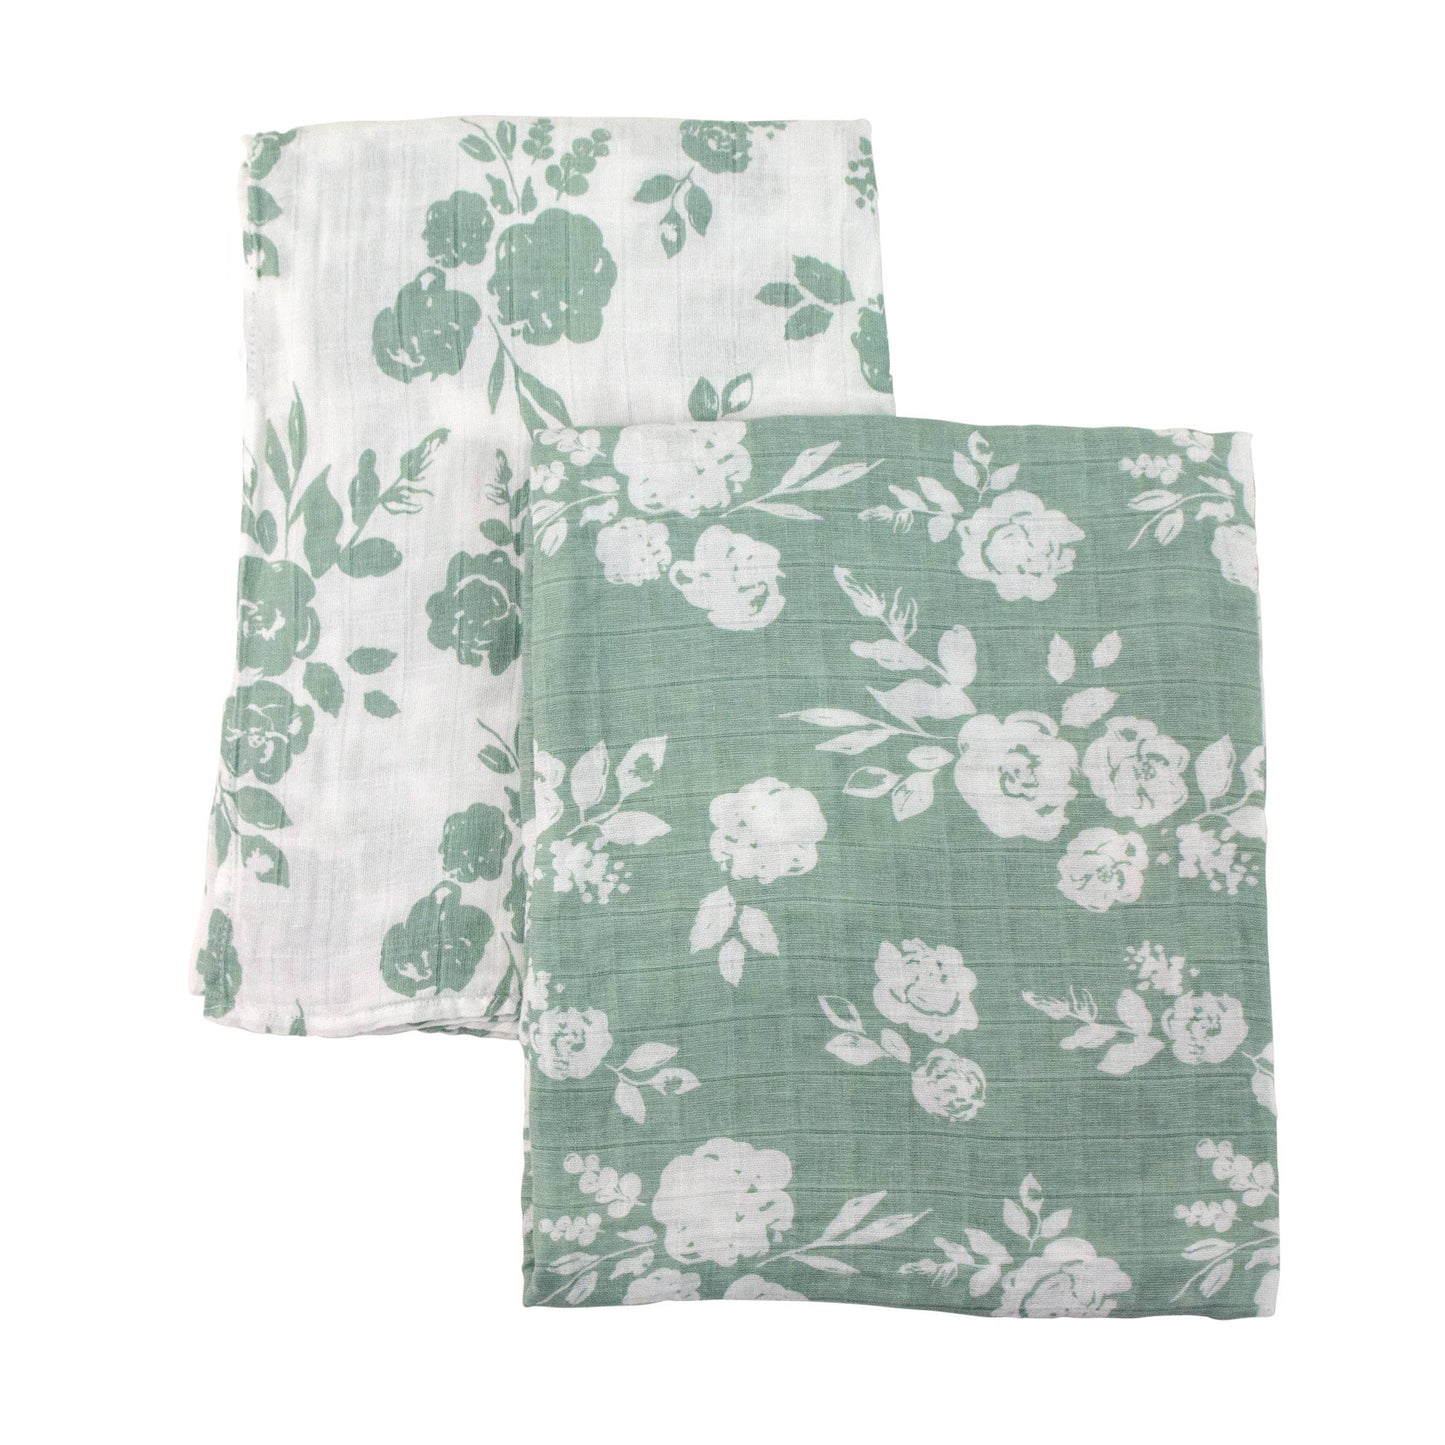 Vintage & Modern Floral Classic Muslin Swaddle Blankets